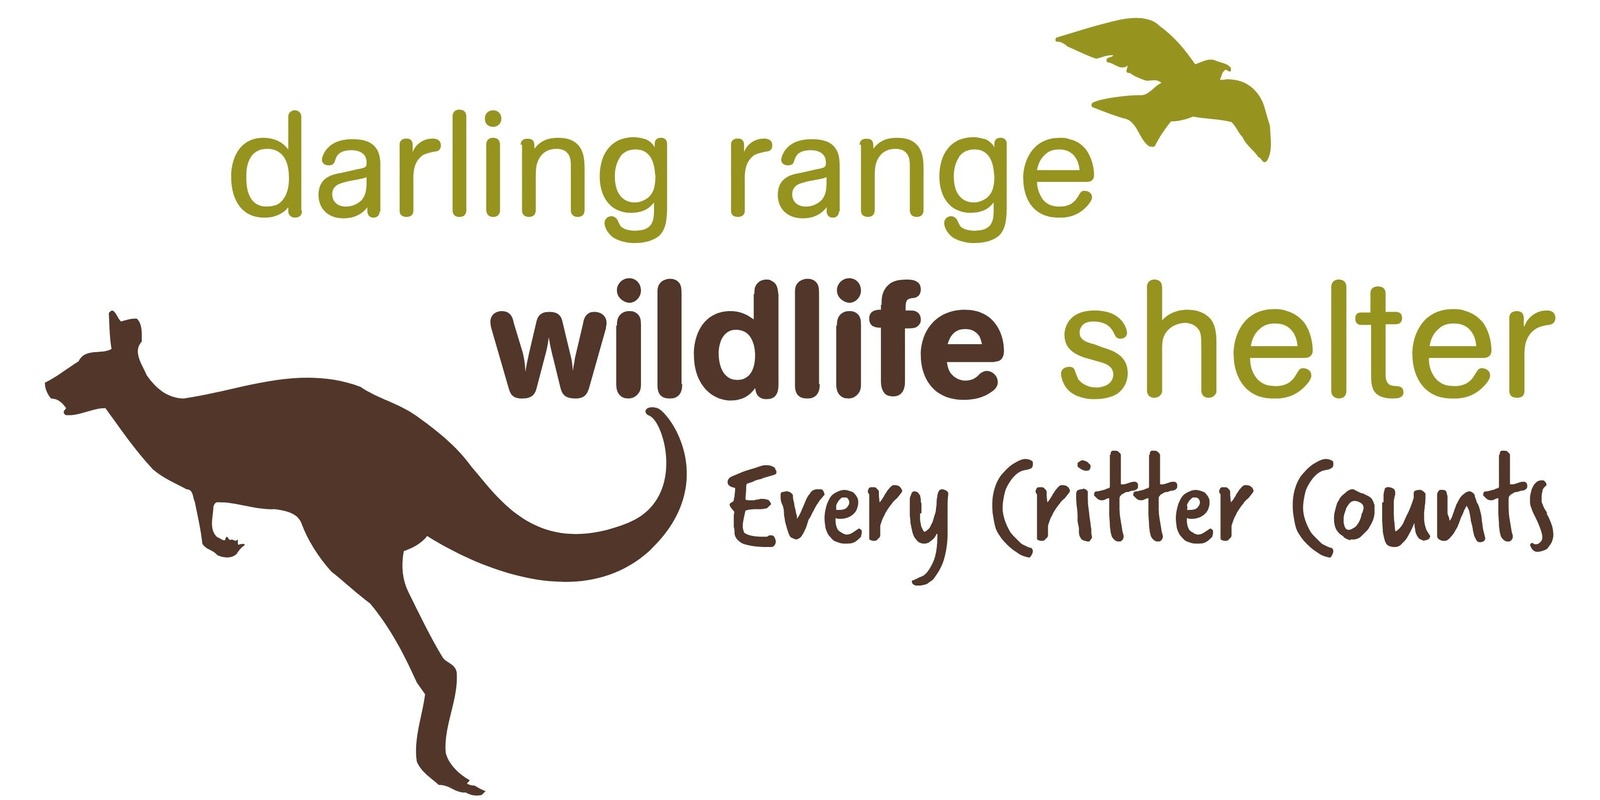 Darling Range Wildlife Shelter's banner